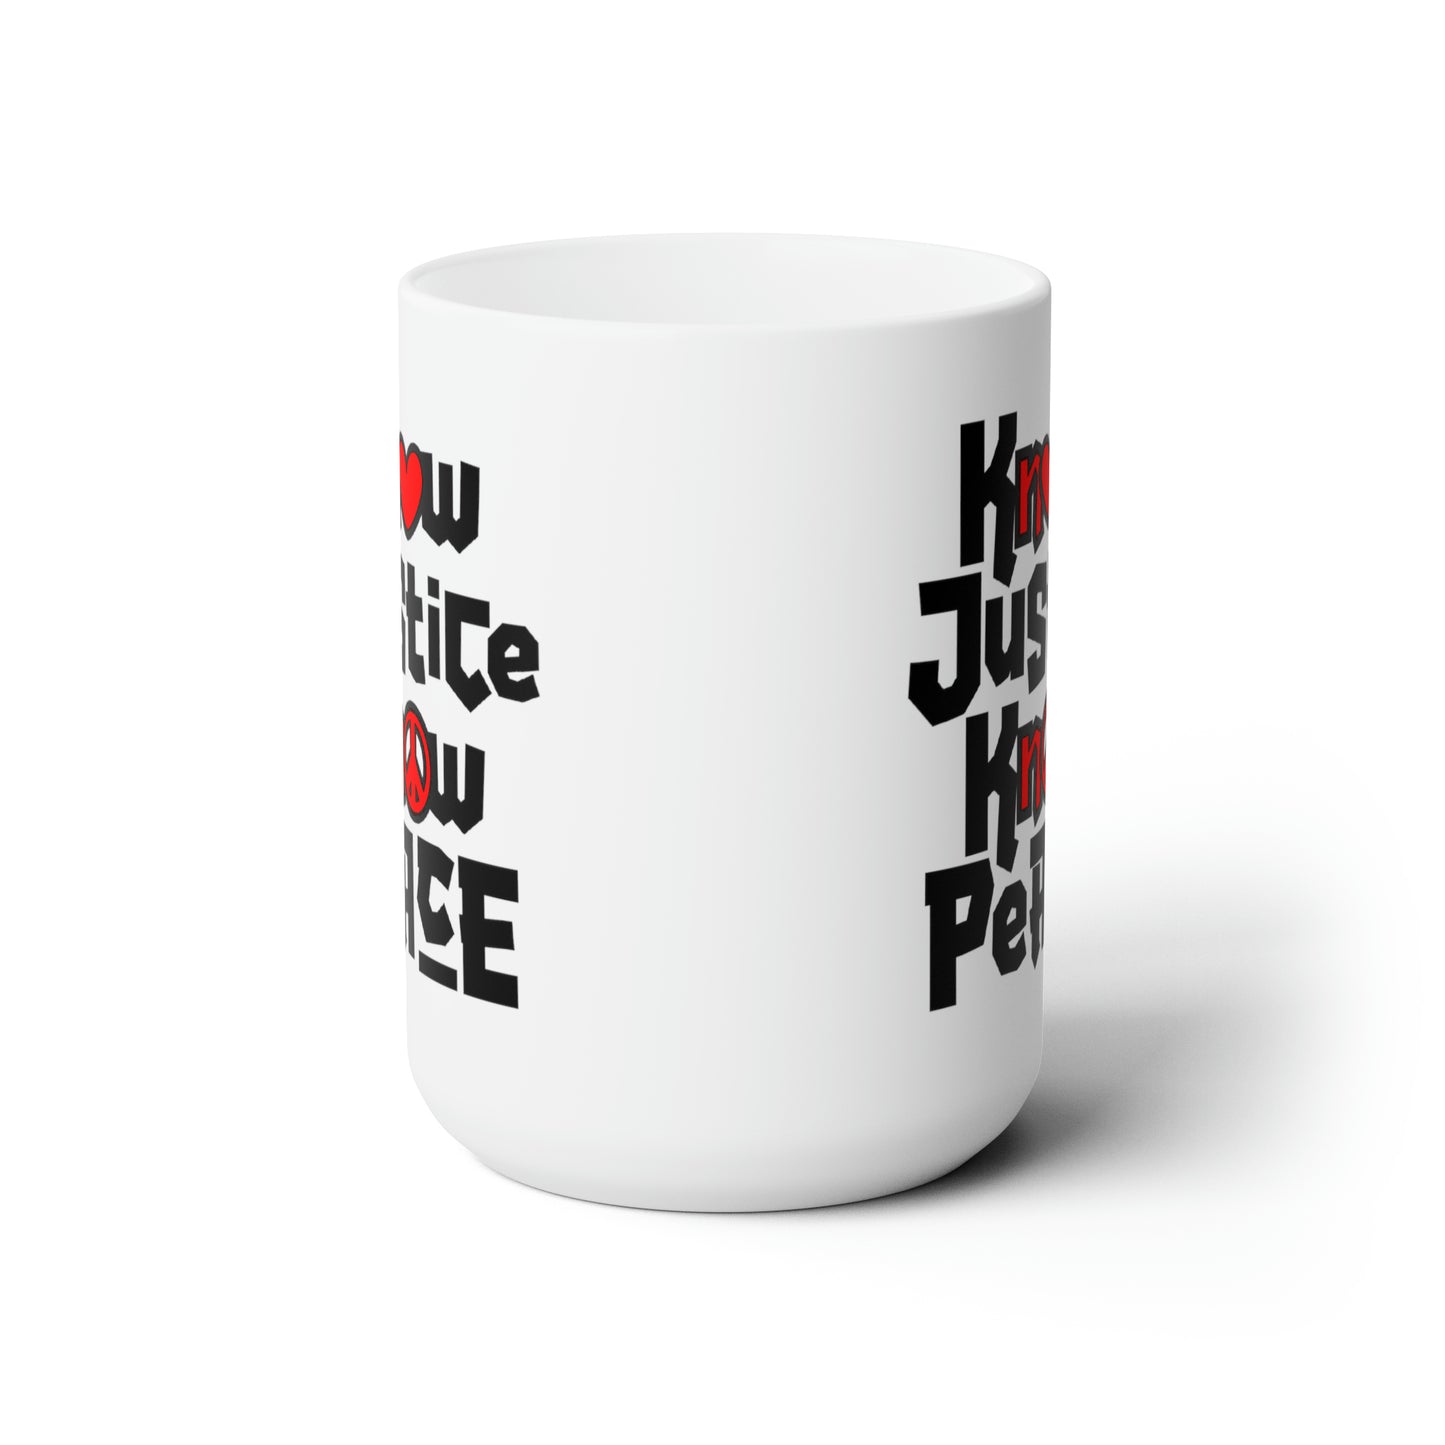 “Know Justice, Know Peace (Heart of Awareness)” 15 oz. Mug